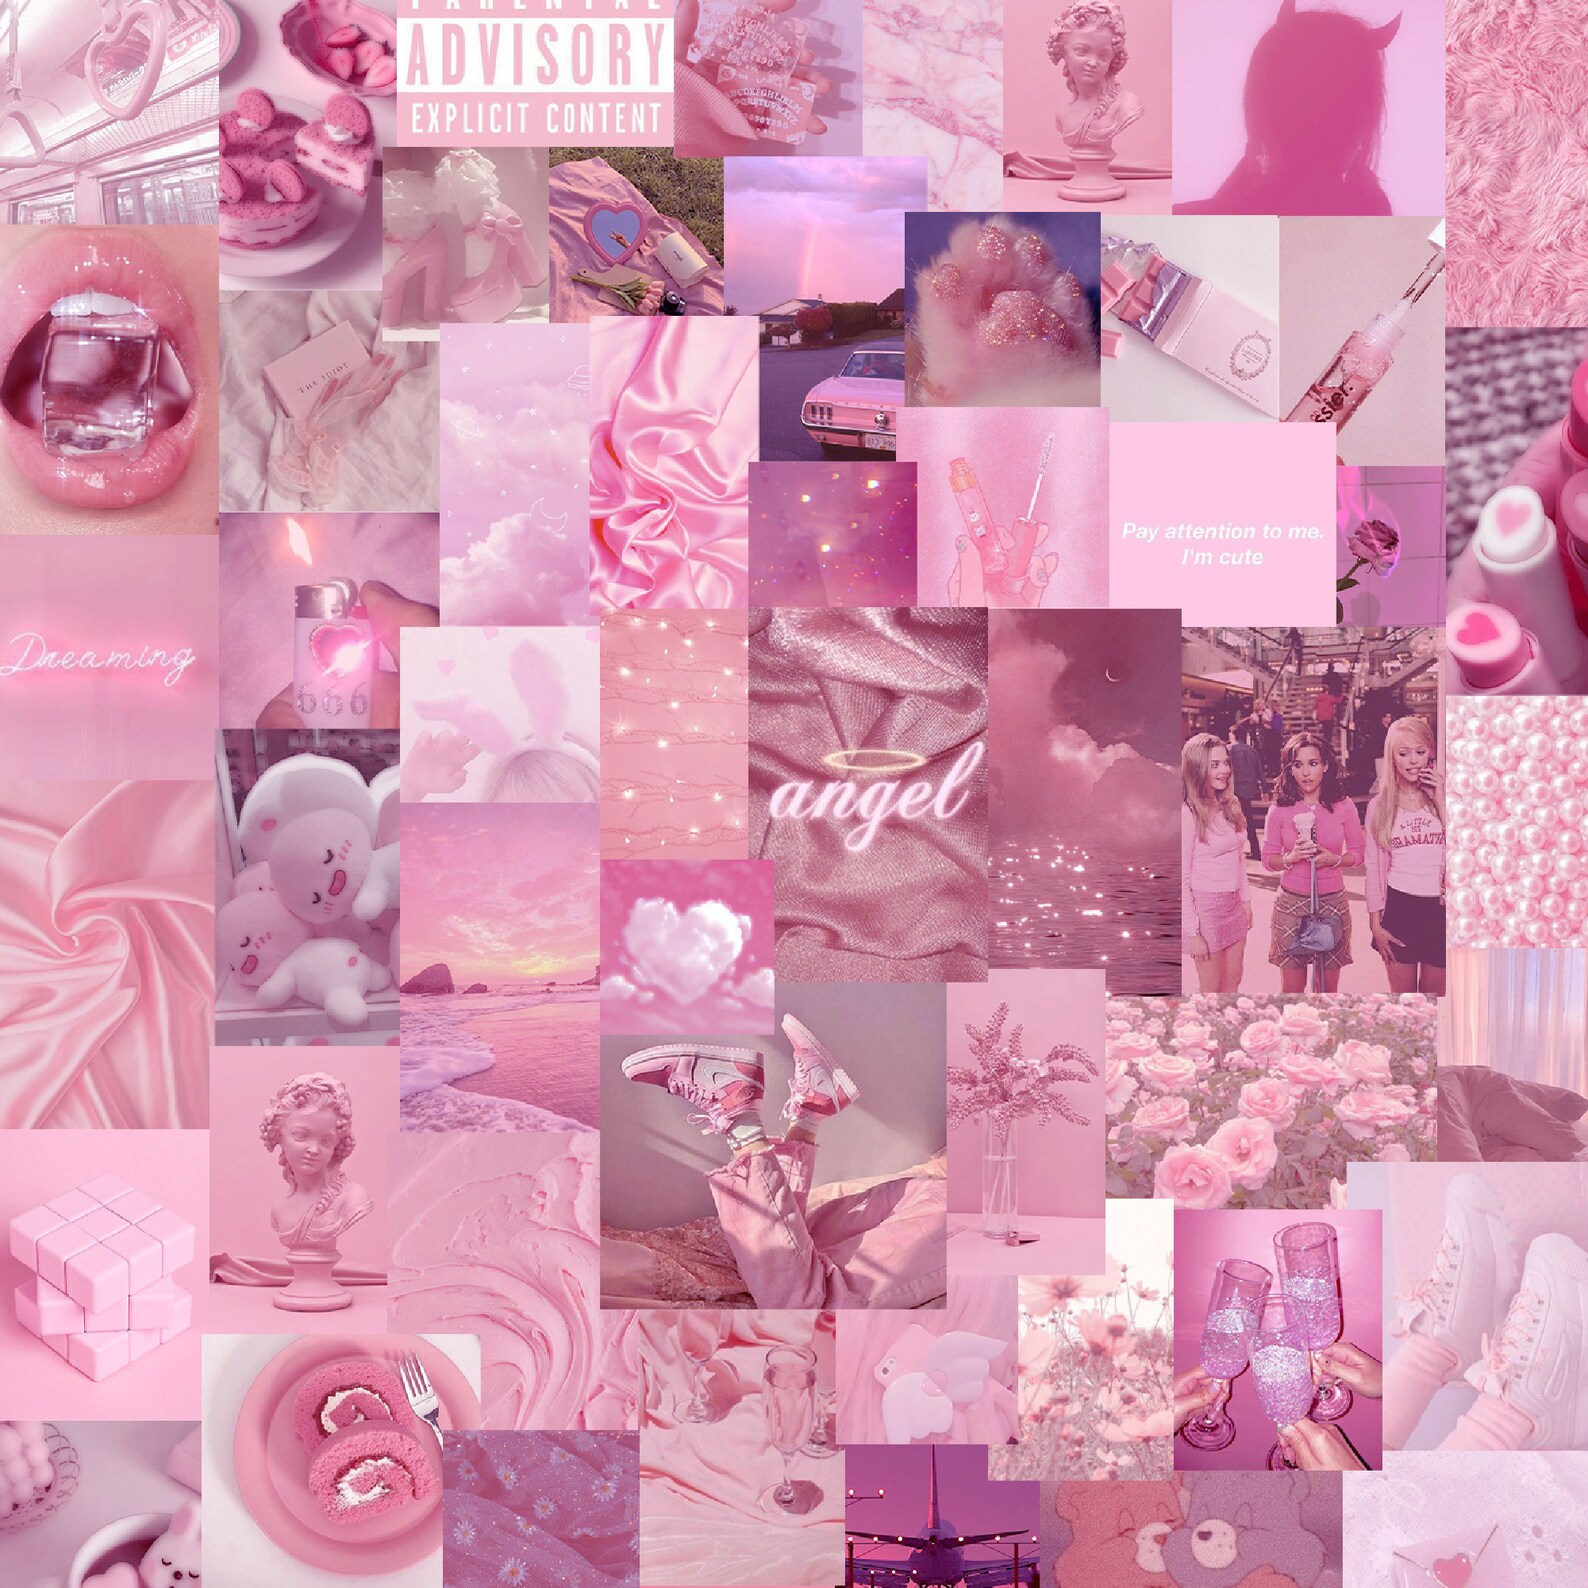 00069 Soft Pink Aesthetic Collage Desktop Wallpaper Art - Etsy